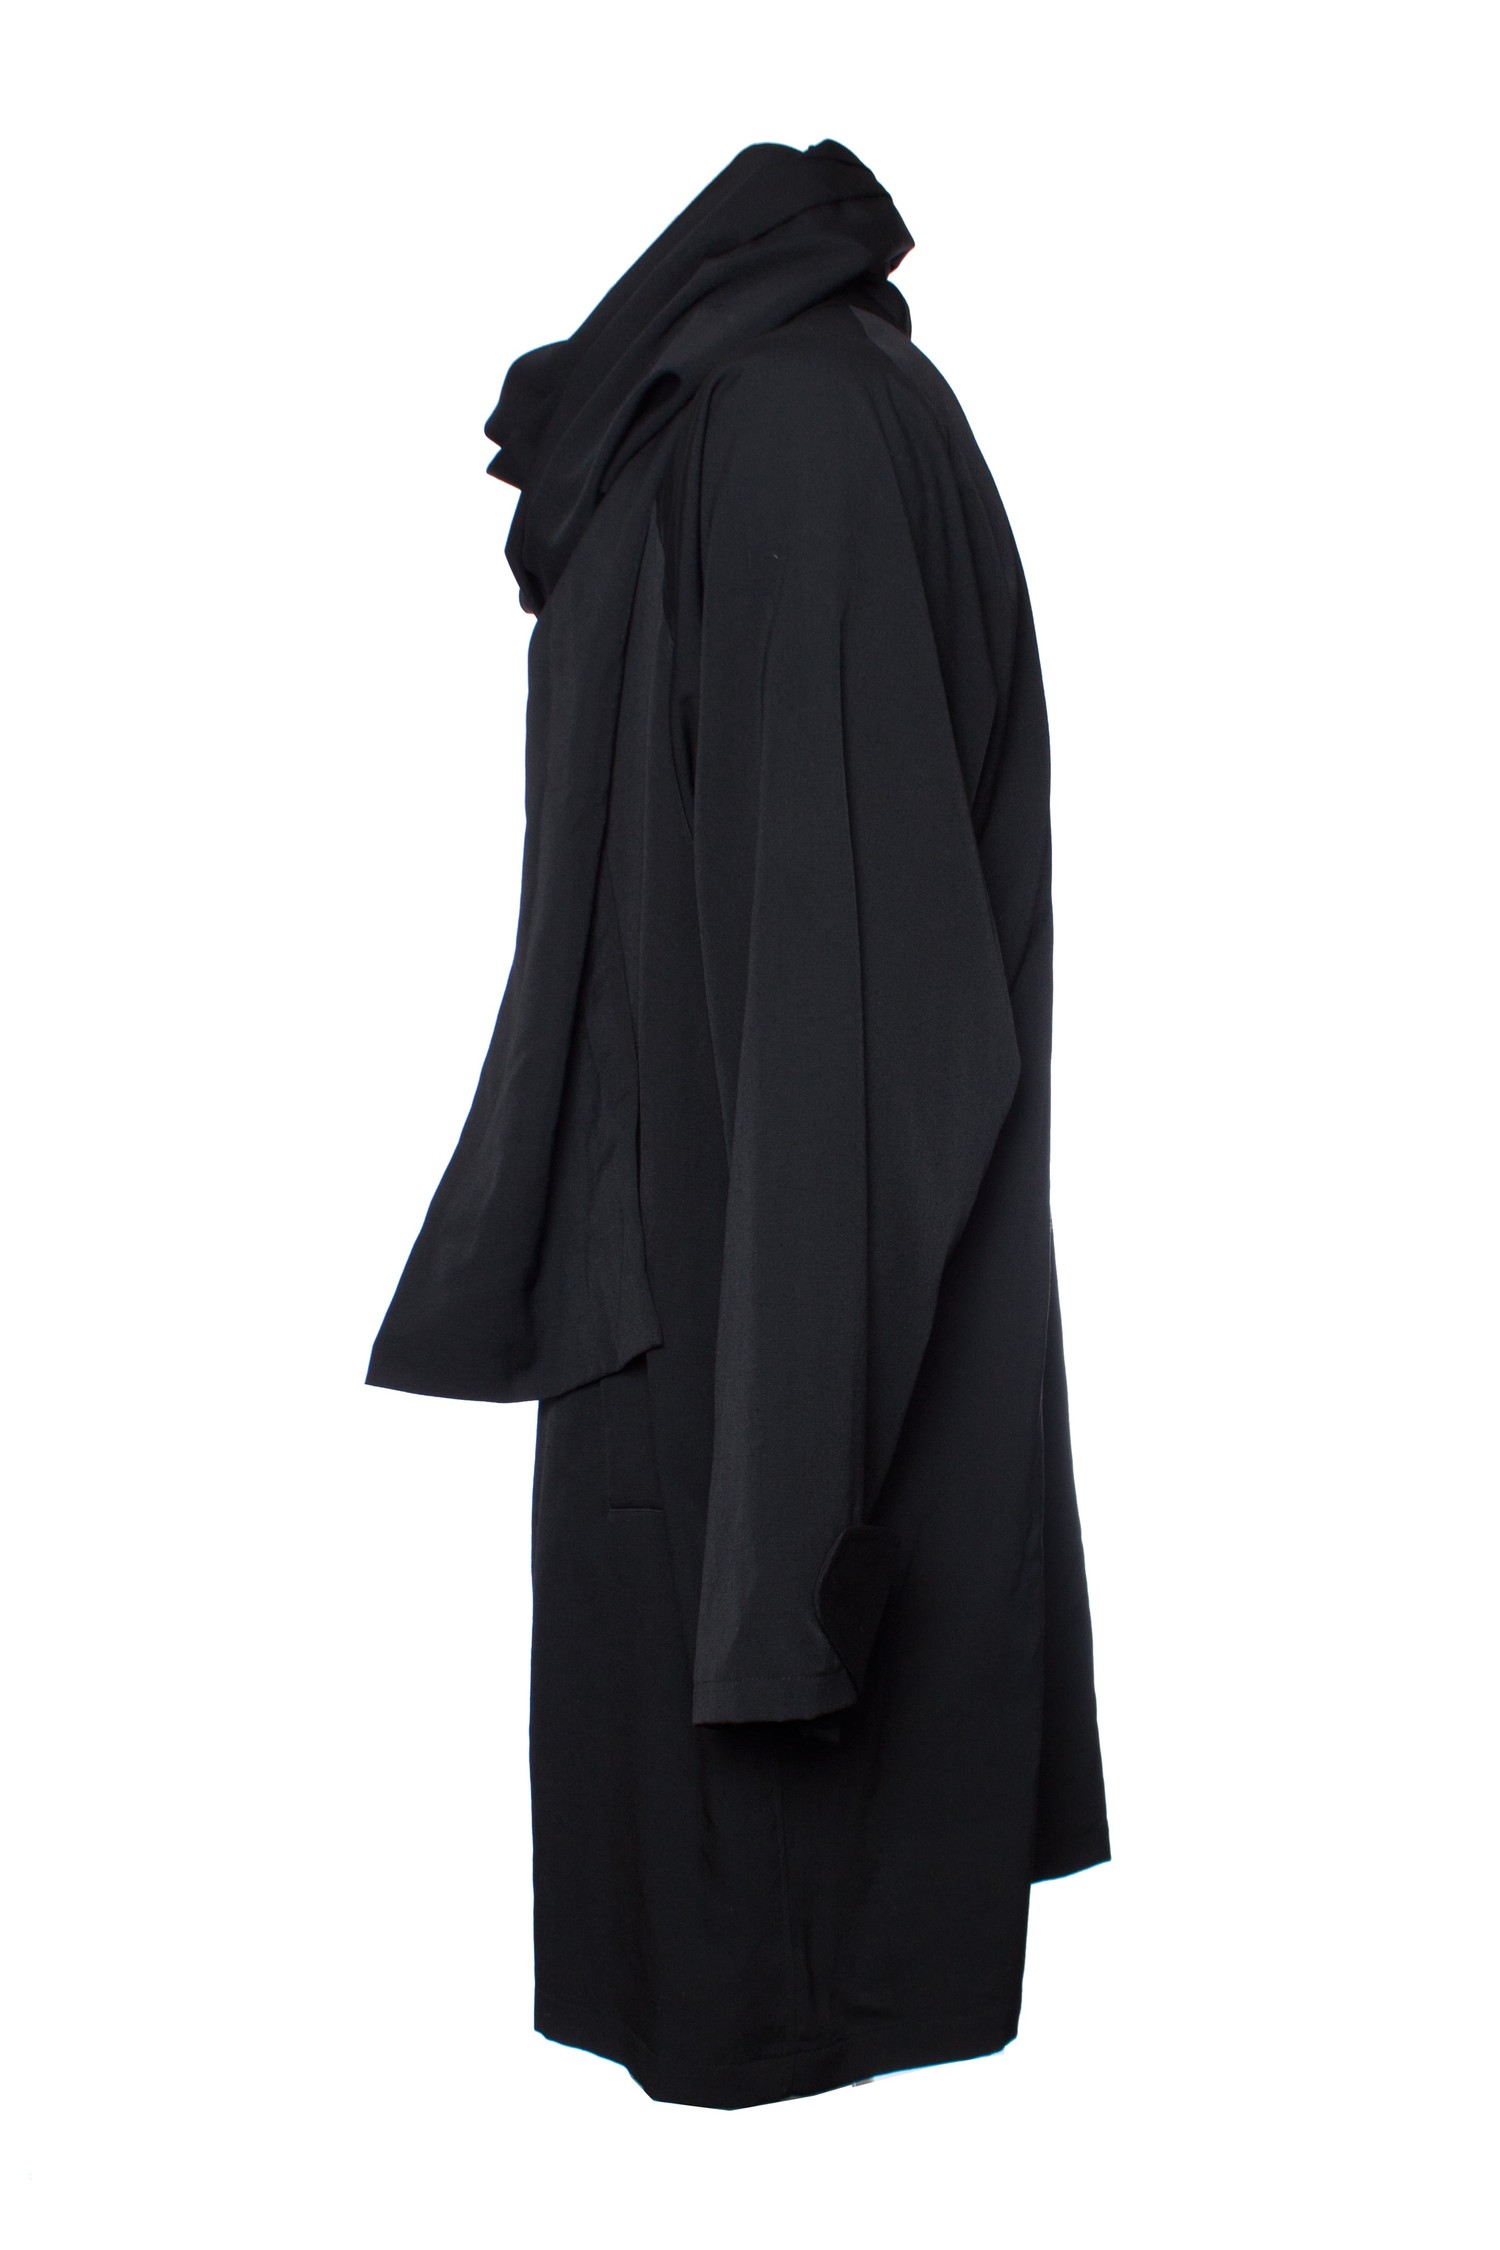 Yohji Yamamoto, Oversized coat with removable zip scarf. - Unique ...